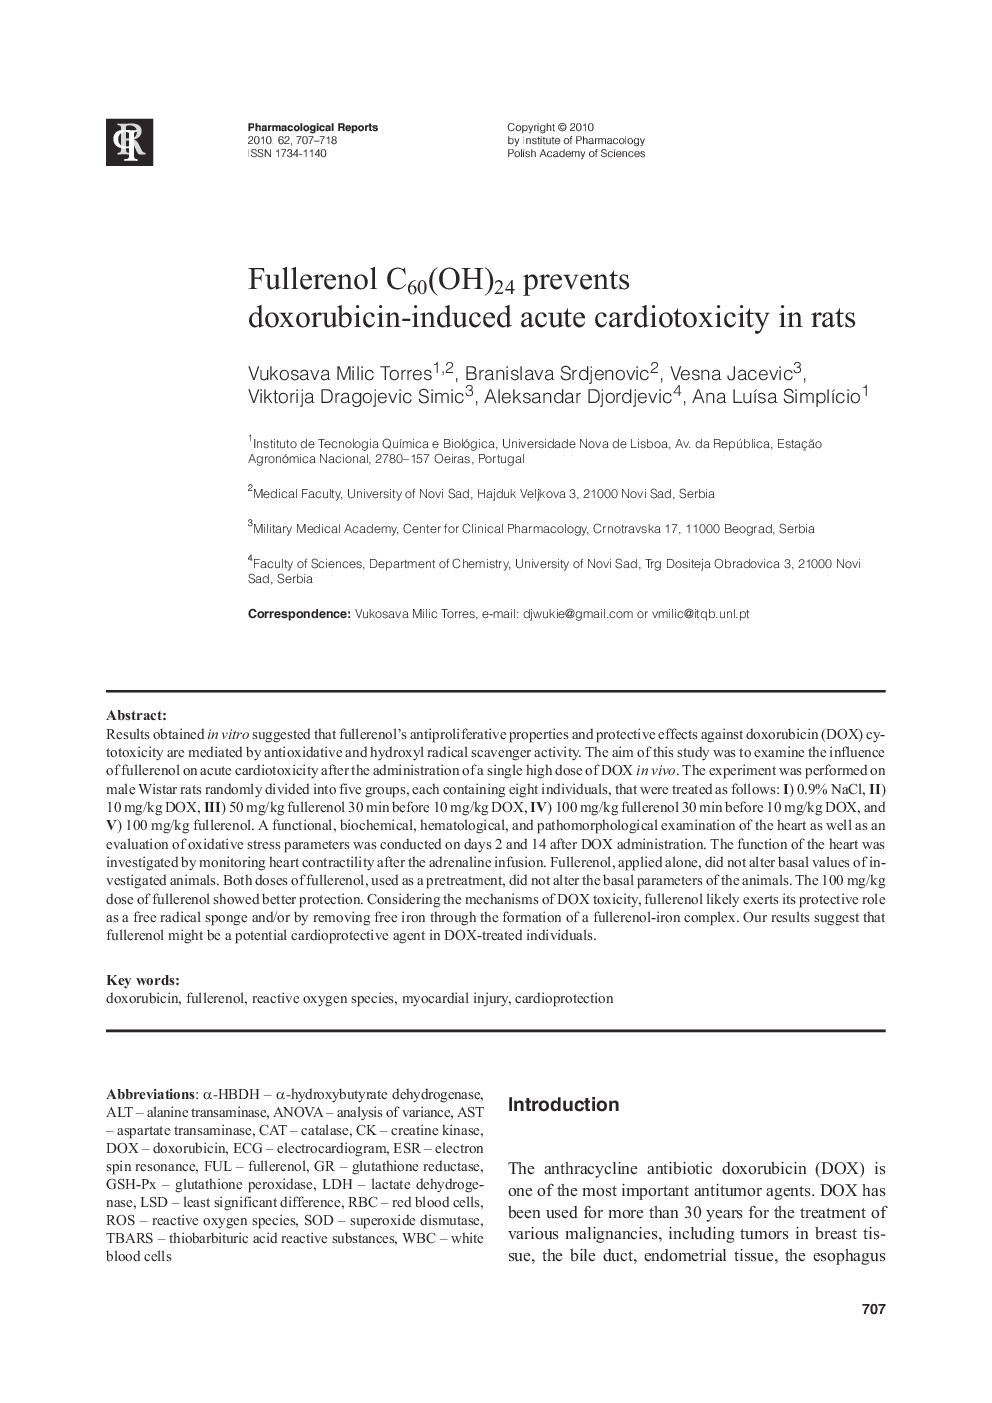 Fullerenol C60(OH)24 prevents doxorubicin-induced acute cardiotoxicity in rats